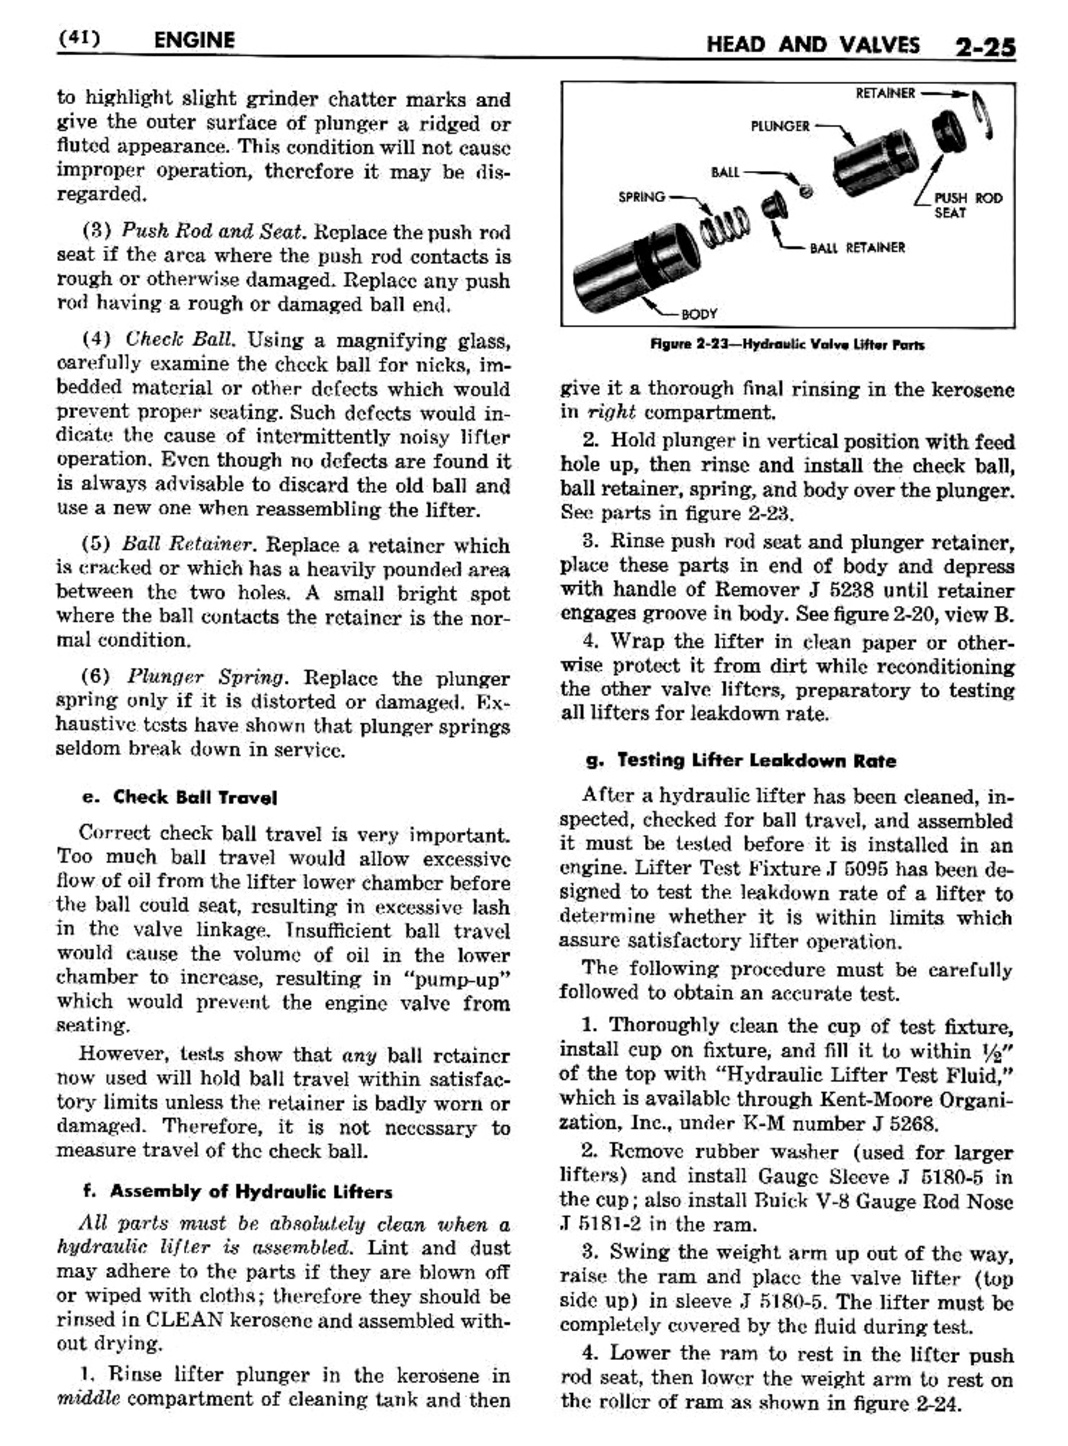 n_03 1956 Buick Shop Manual - Engine-025-025.jpg